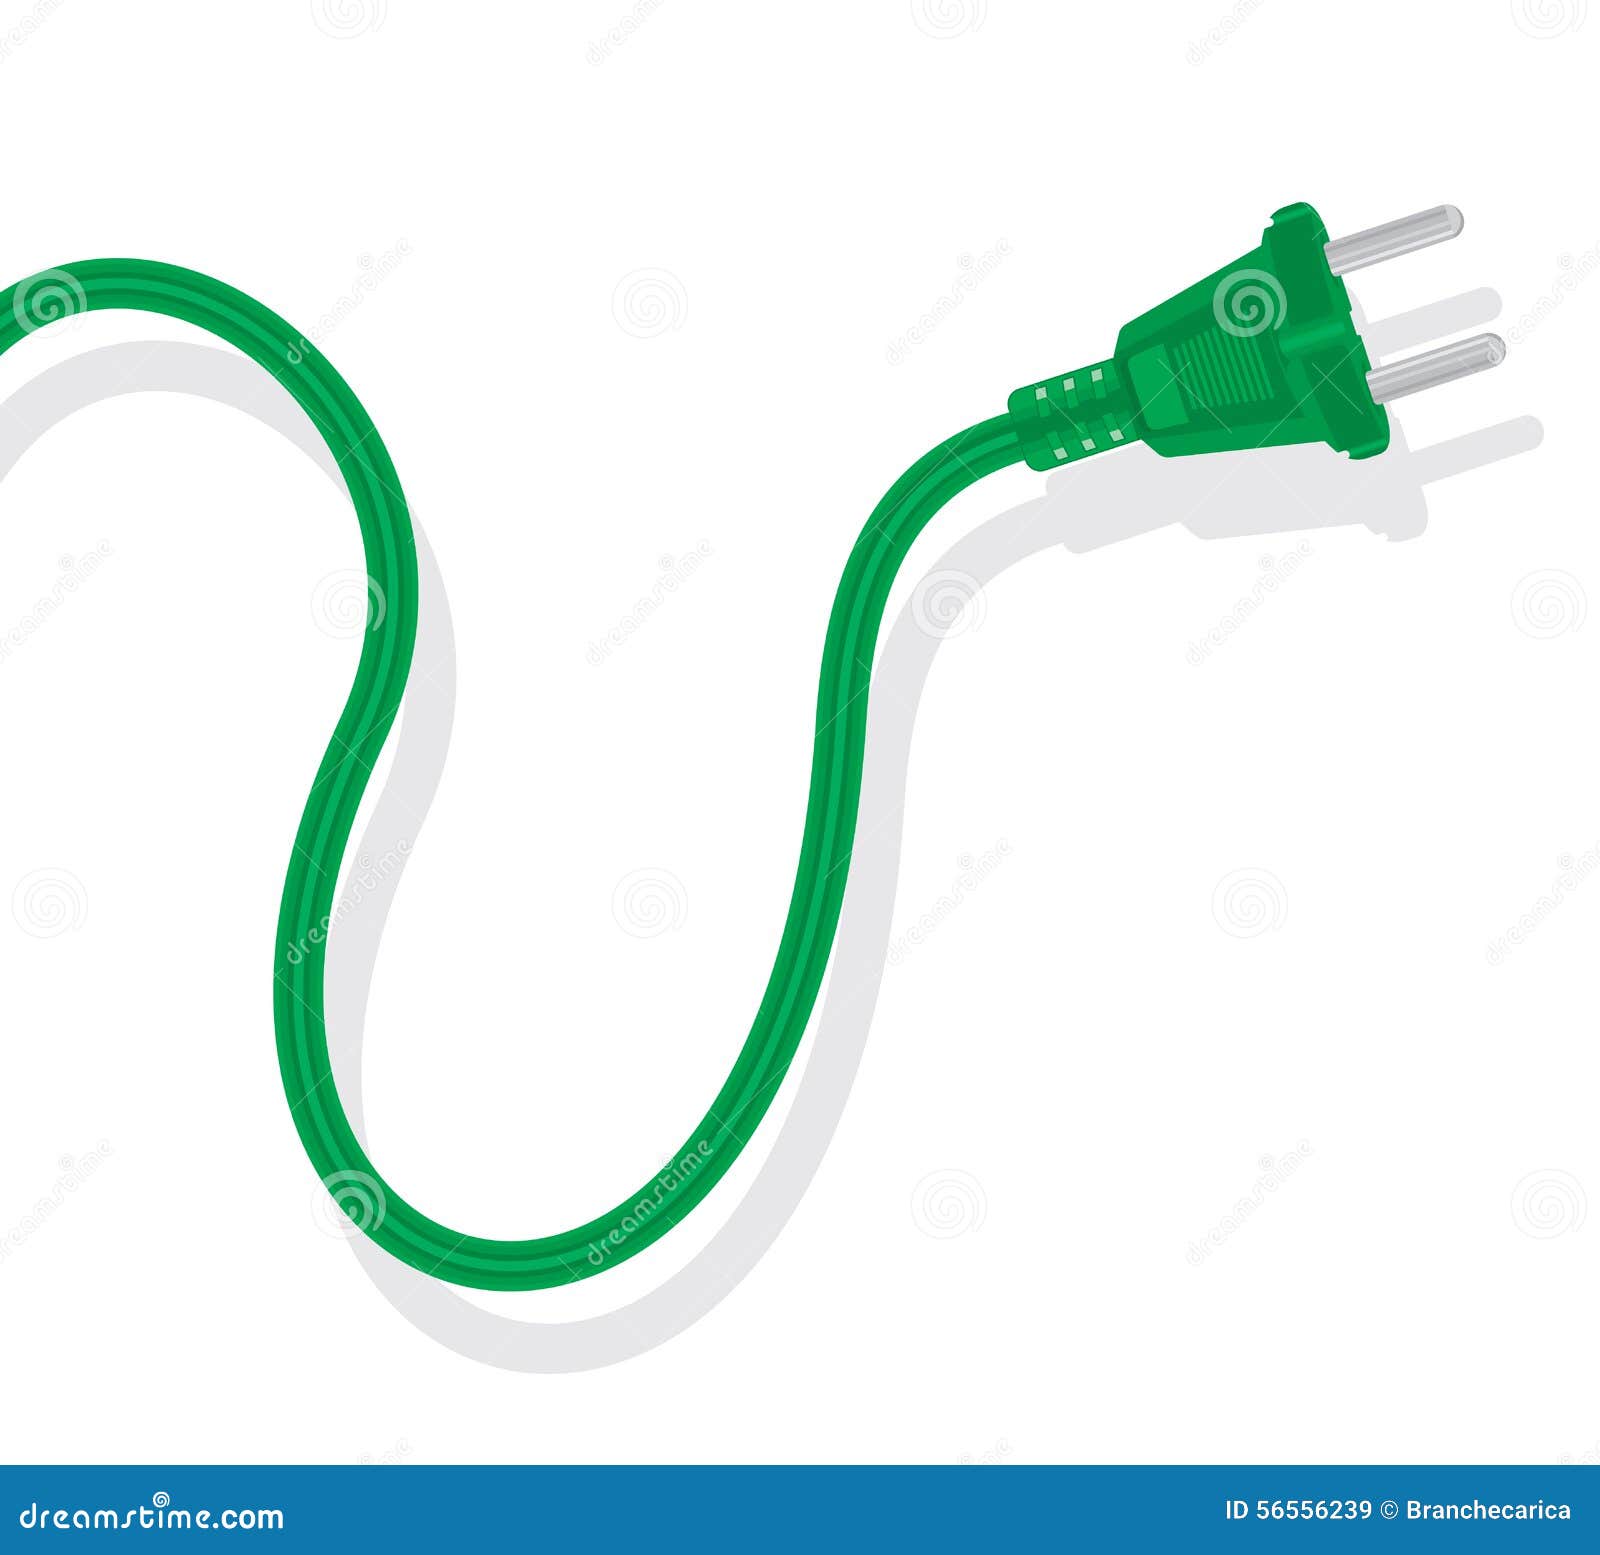 clipart power cord - photo #28